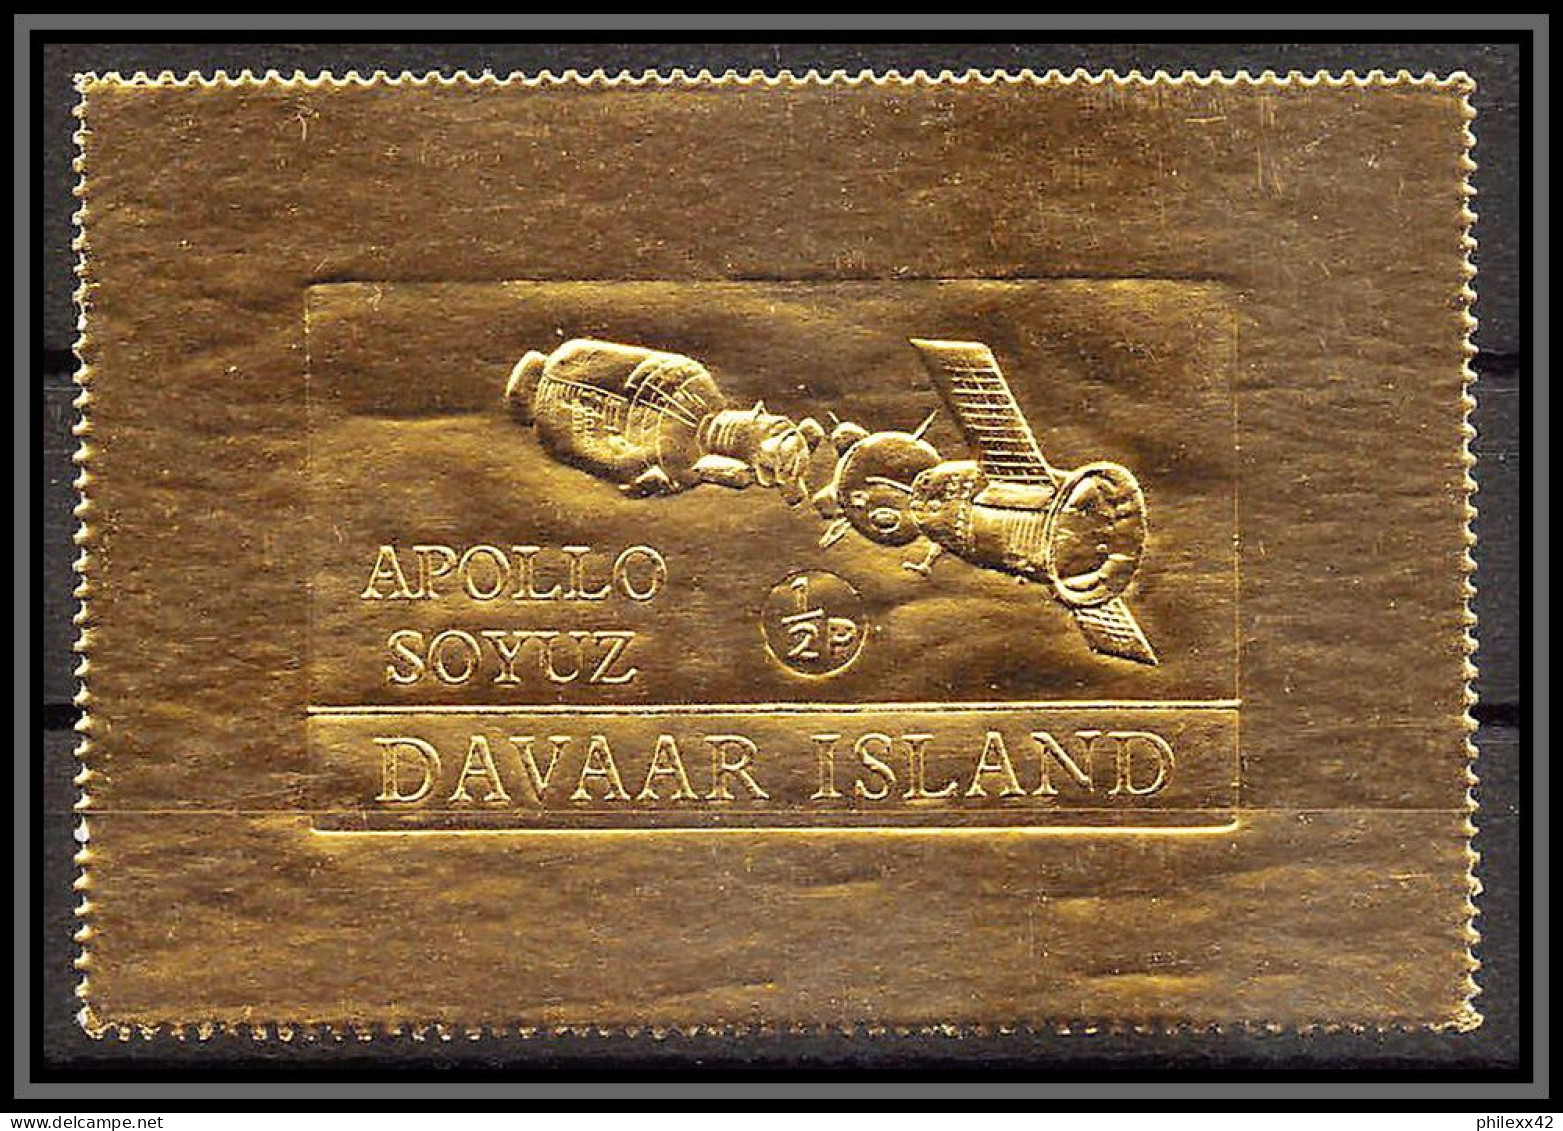 310a Davaar Scotland Apollo 1/2 P Soyuz (soyouz Sojus) Timbres OR Gold Stamps Géant Large - Ecosse